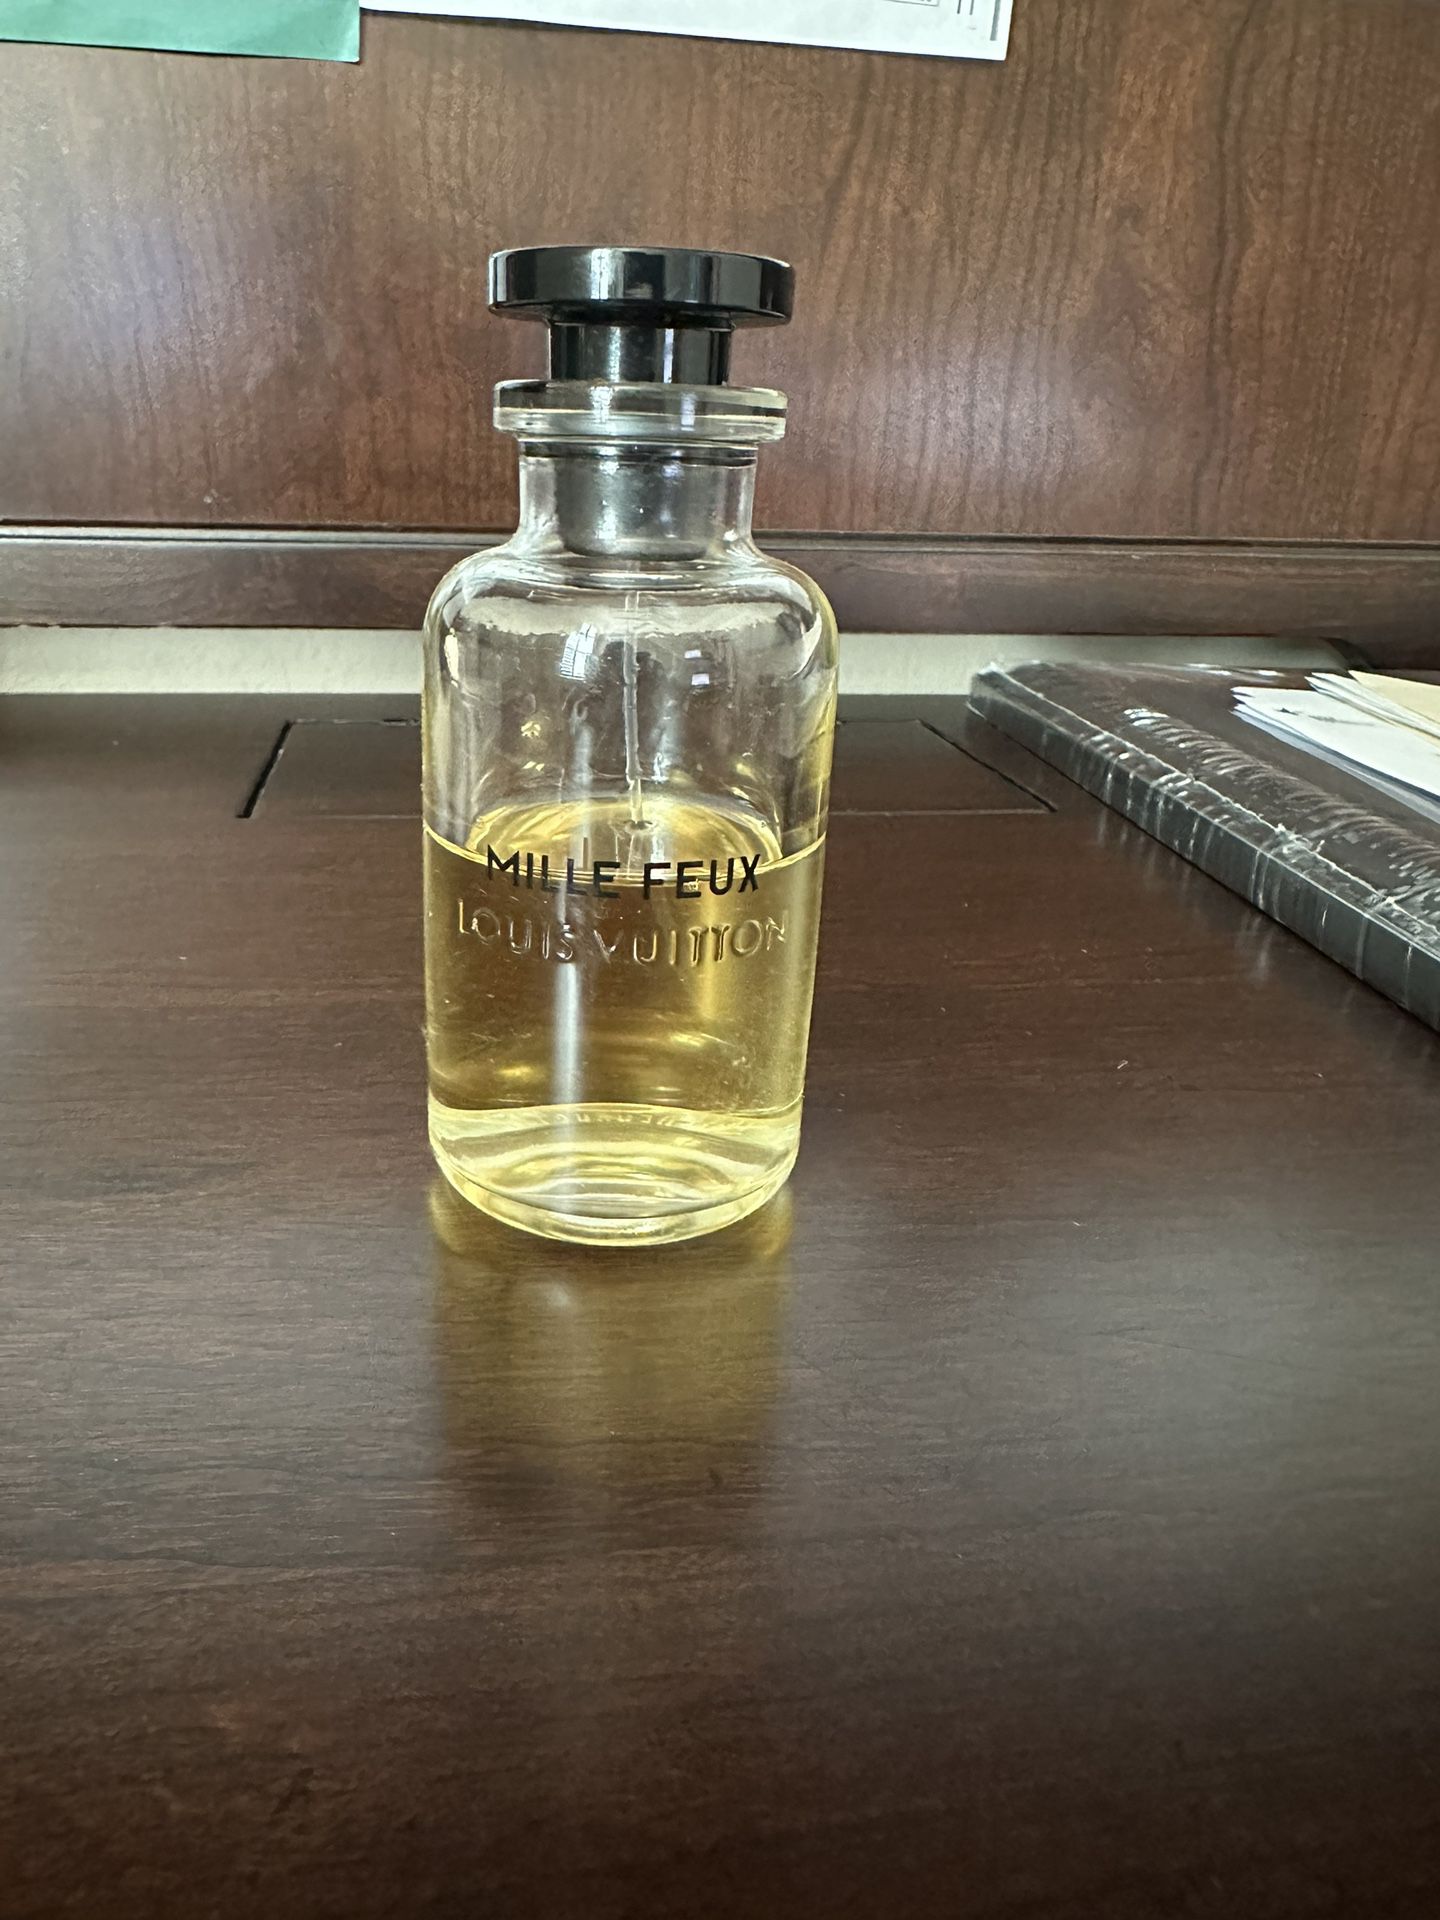 Buy Louis Vuitton - Mille Feux for Women Perfume Oil